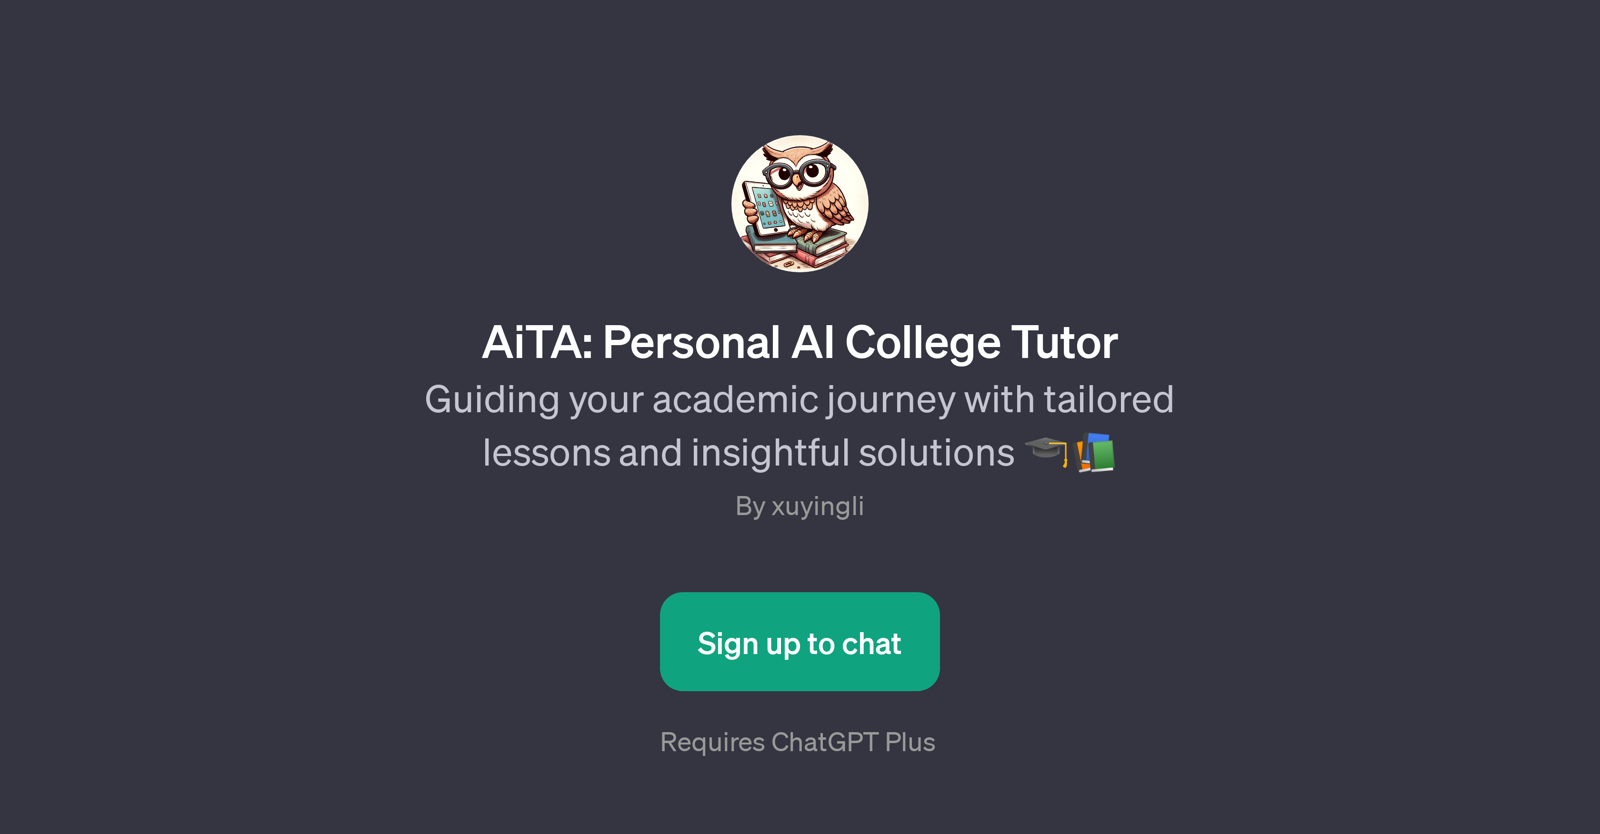 AiTA: Personal AI College Tutor website